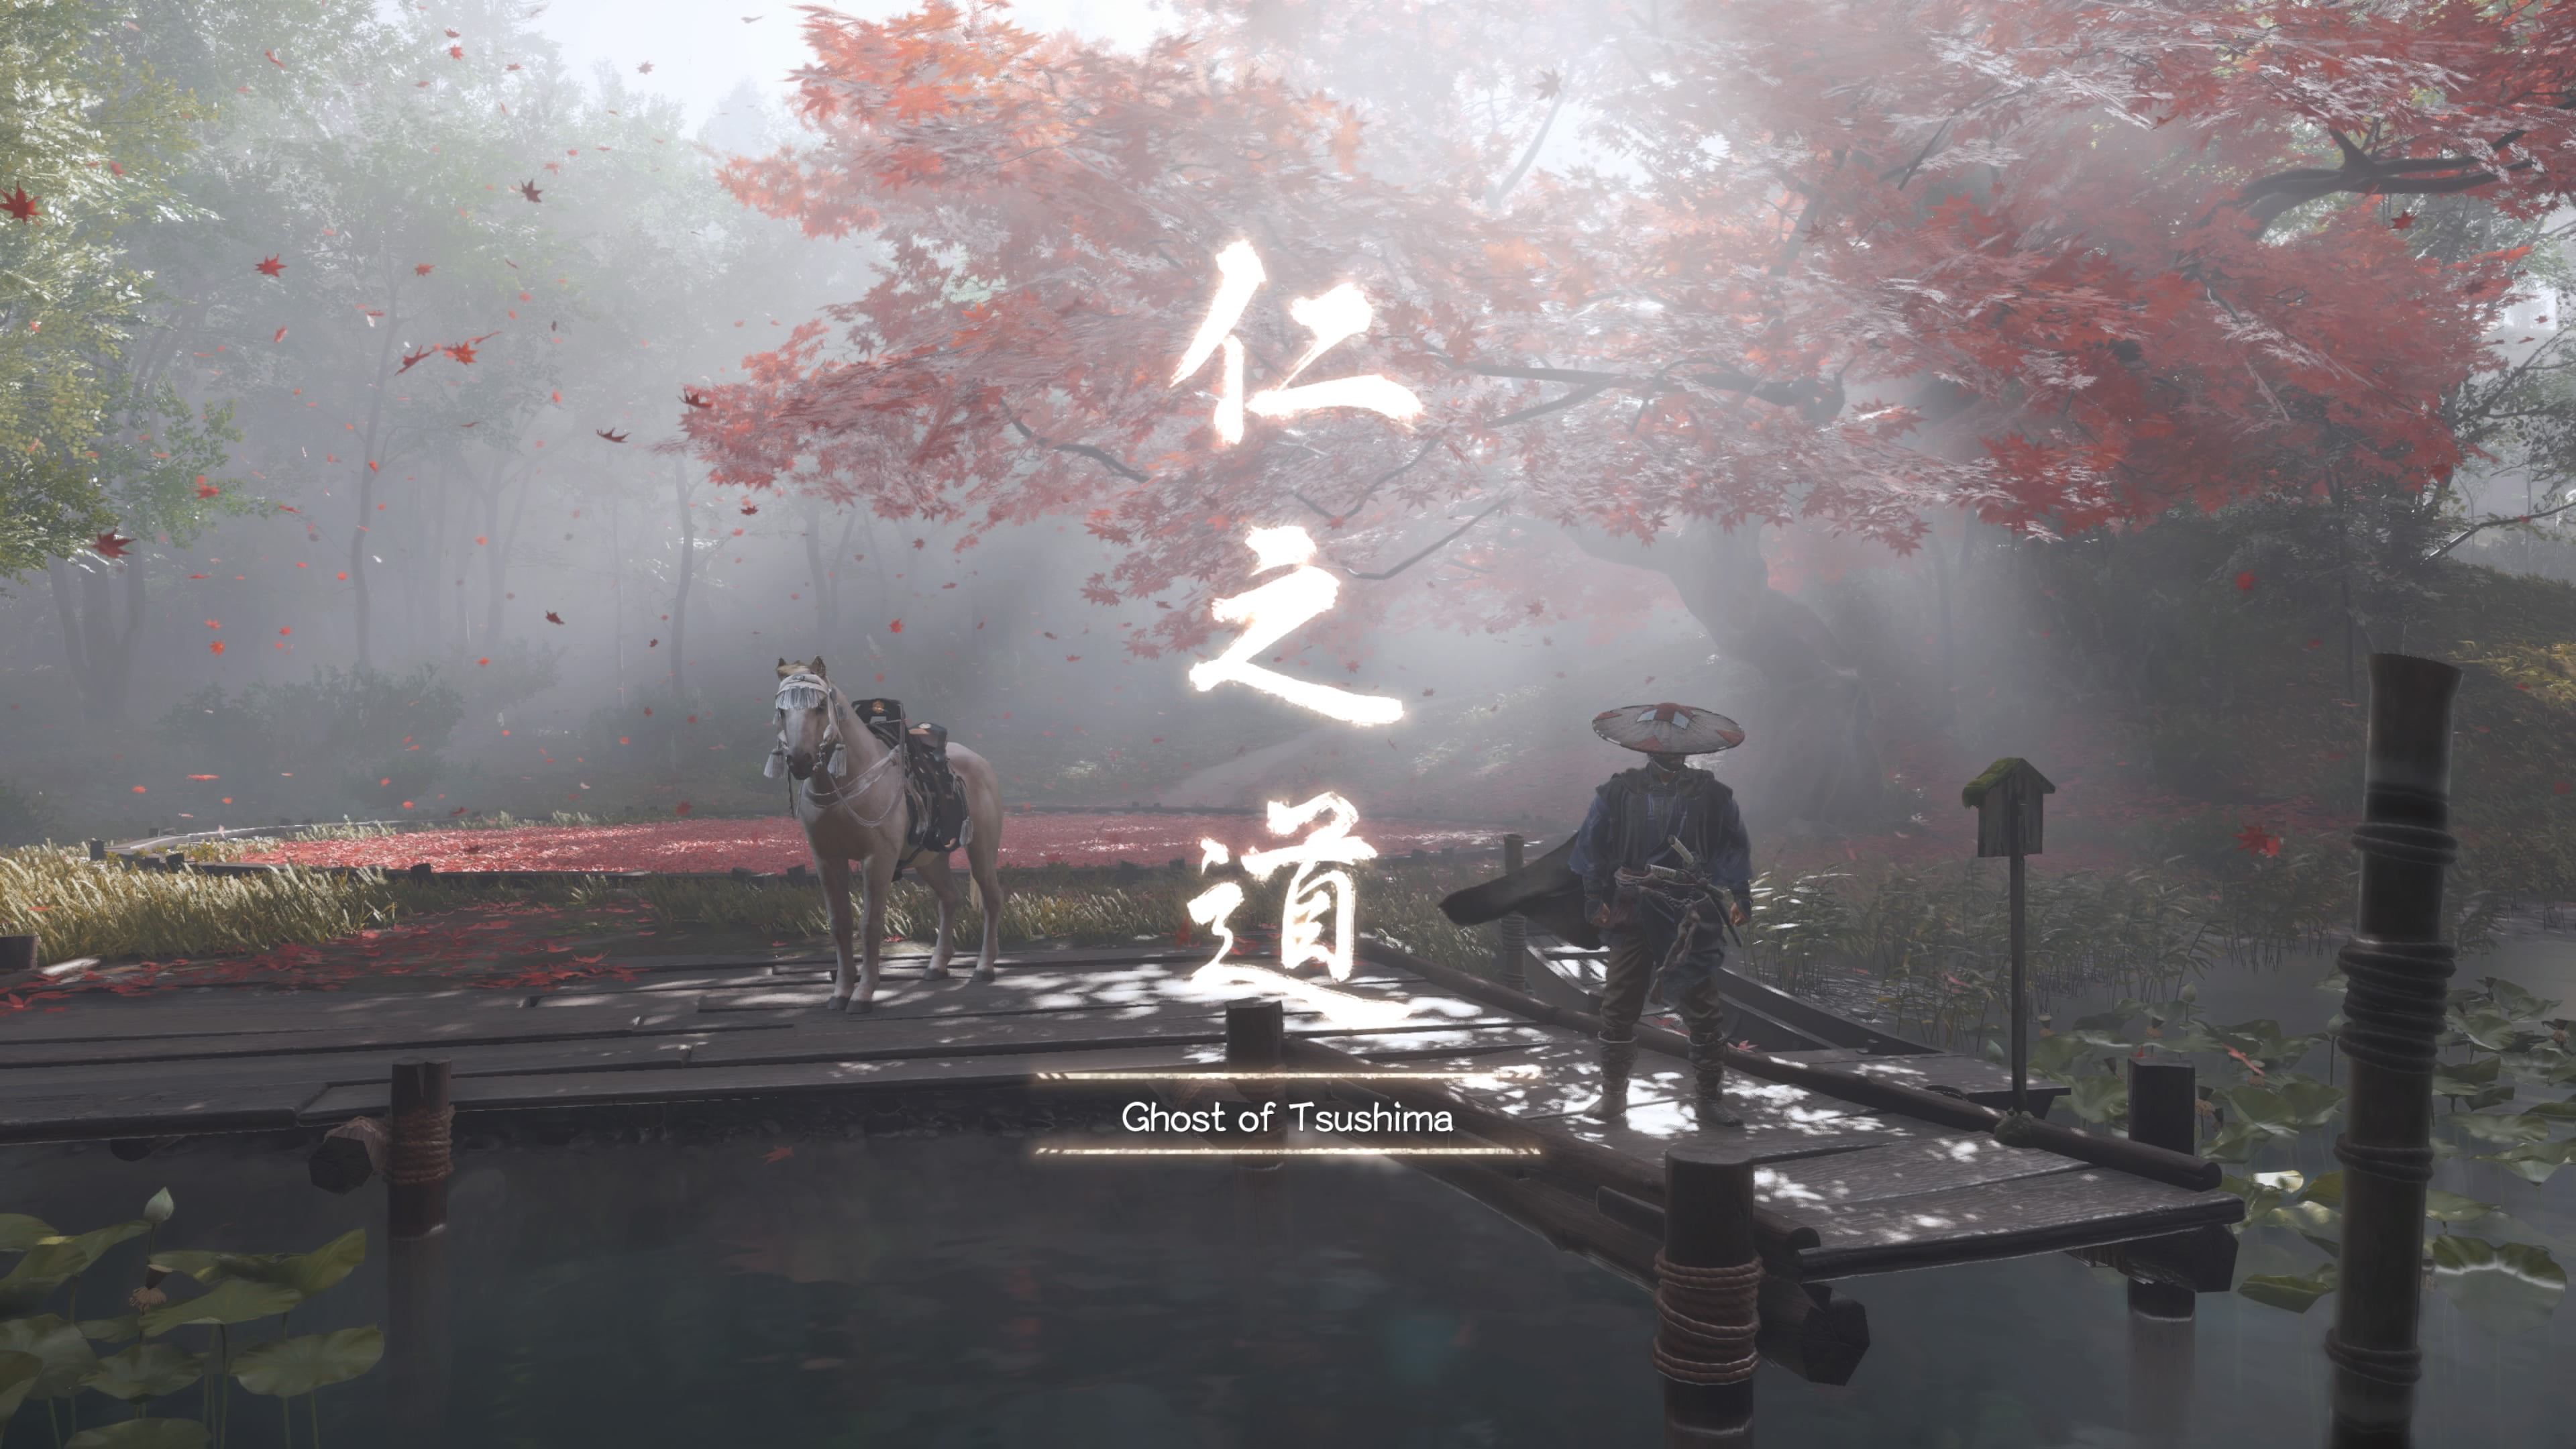 samurai, Japan, Ghost of Tsushima, PlayStation 4, video games